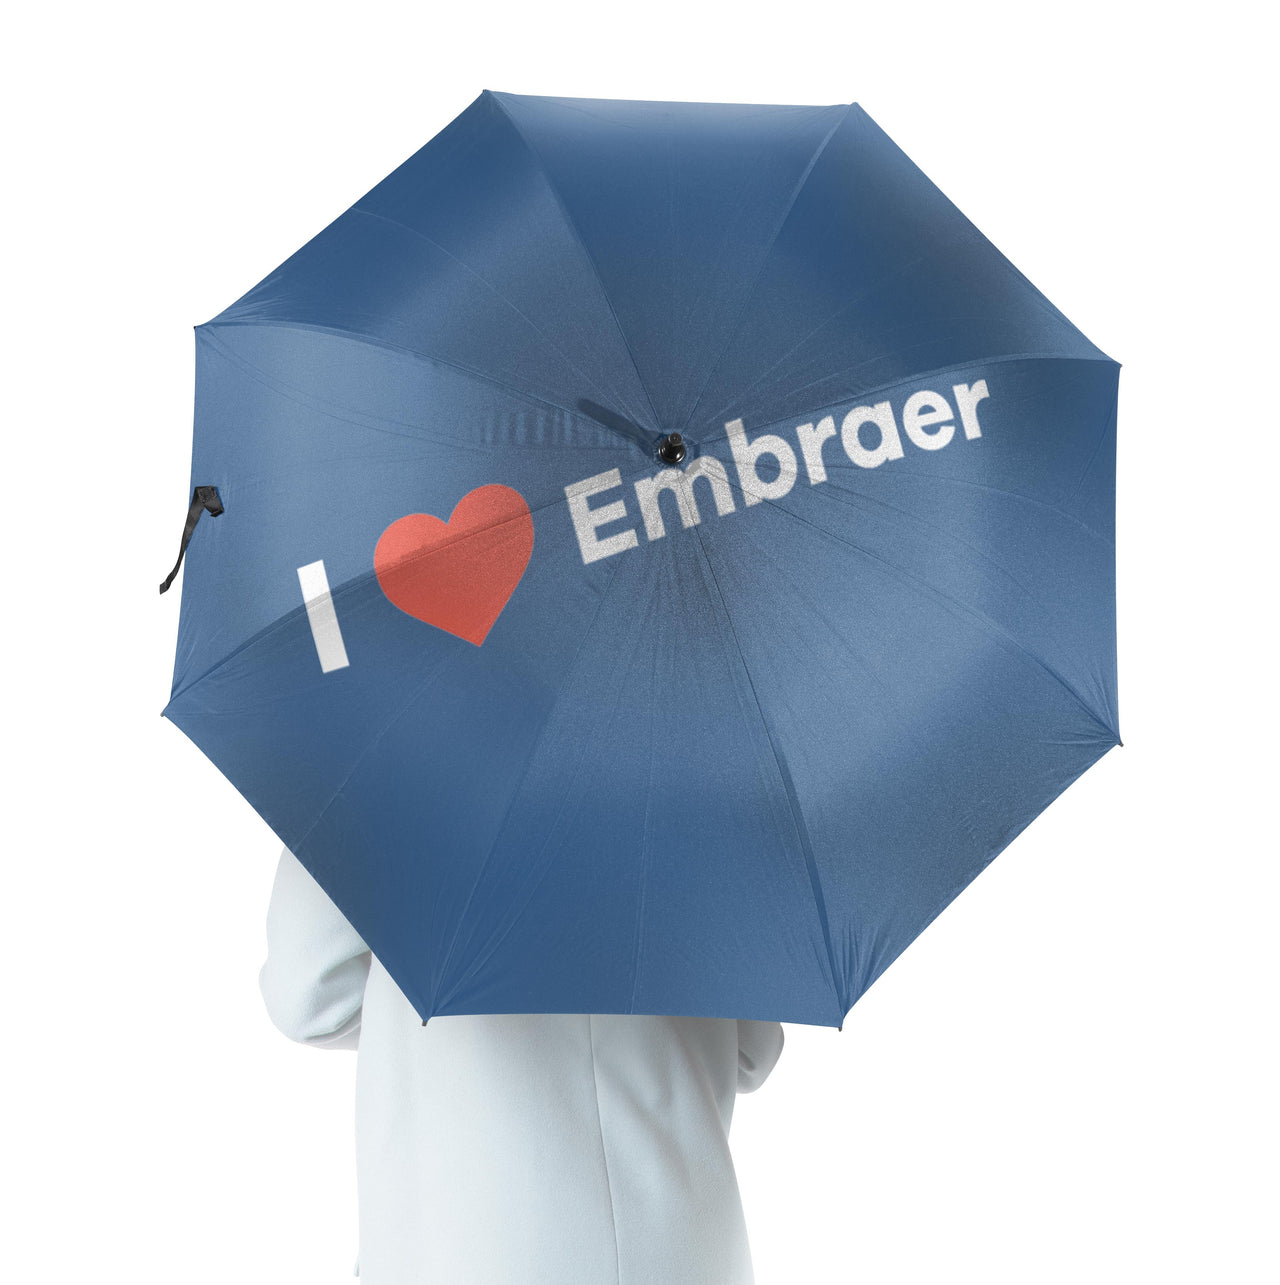 I Love Embraer Designed Umbrella